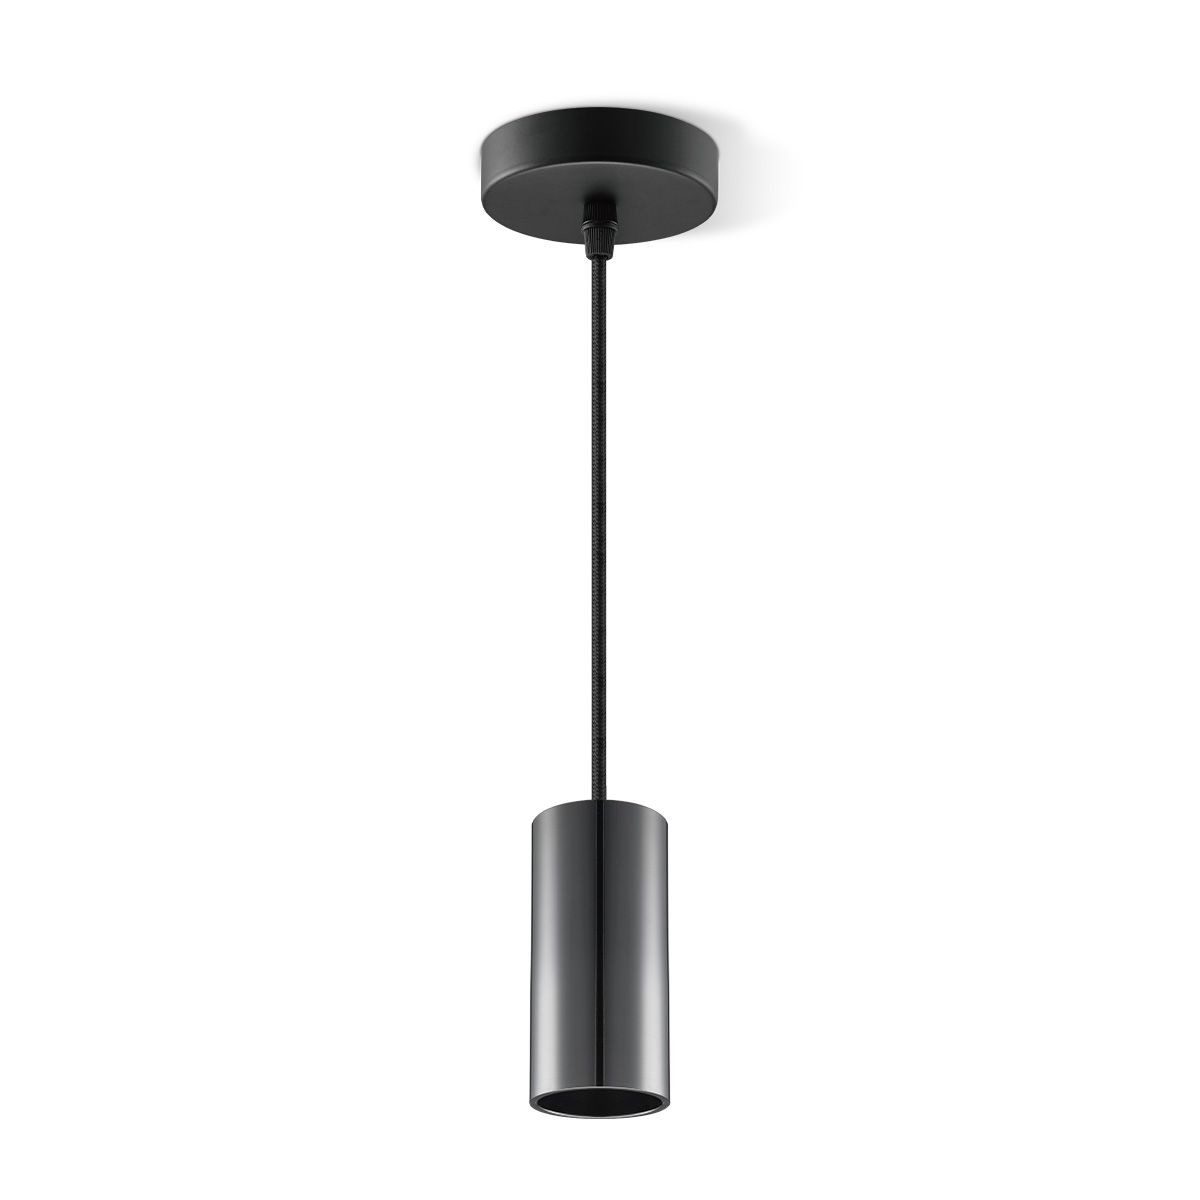 Koop Light depot - hanglamp pendel Saga - zwart lamp) - Outlet met de korting bij depot Outlet!